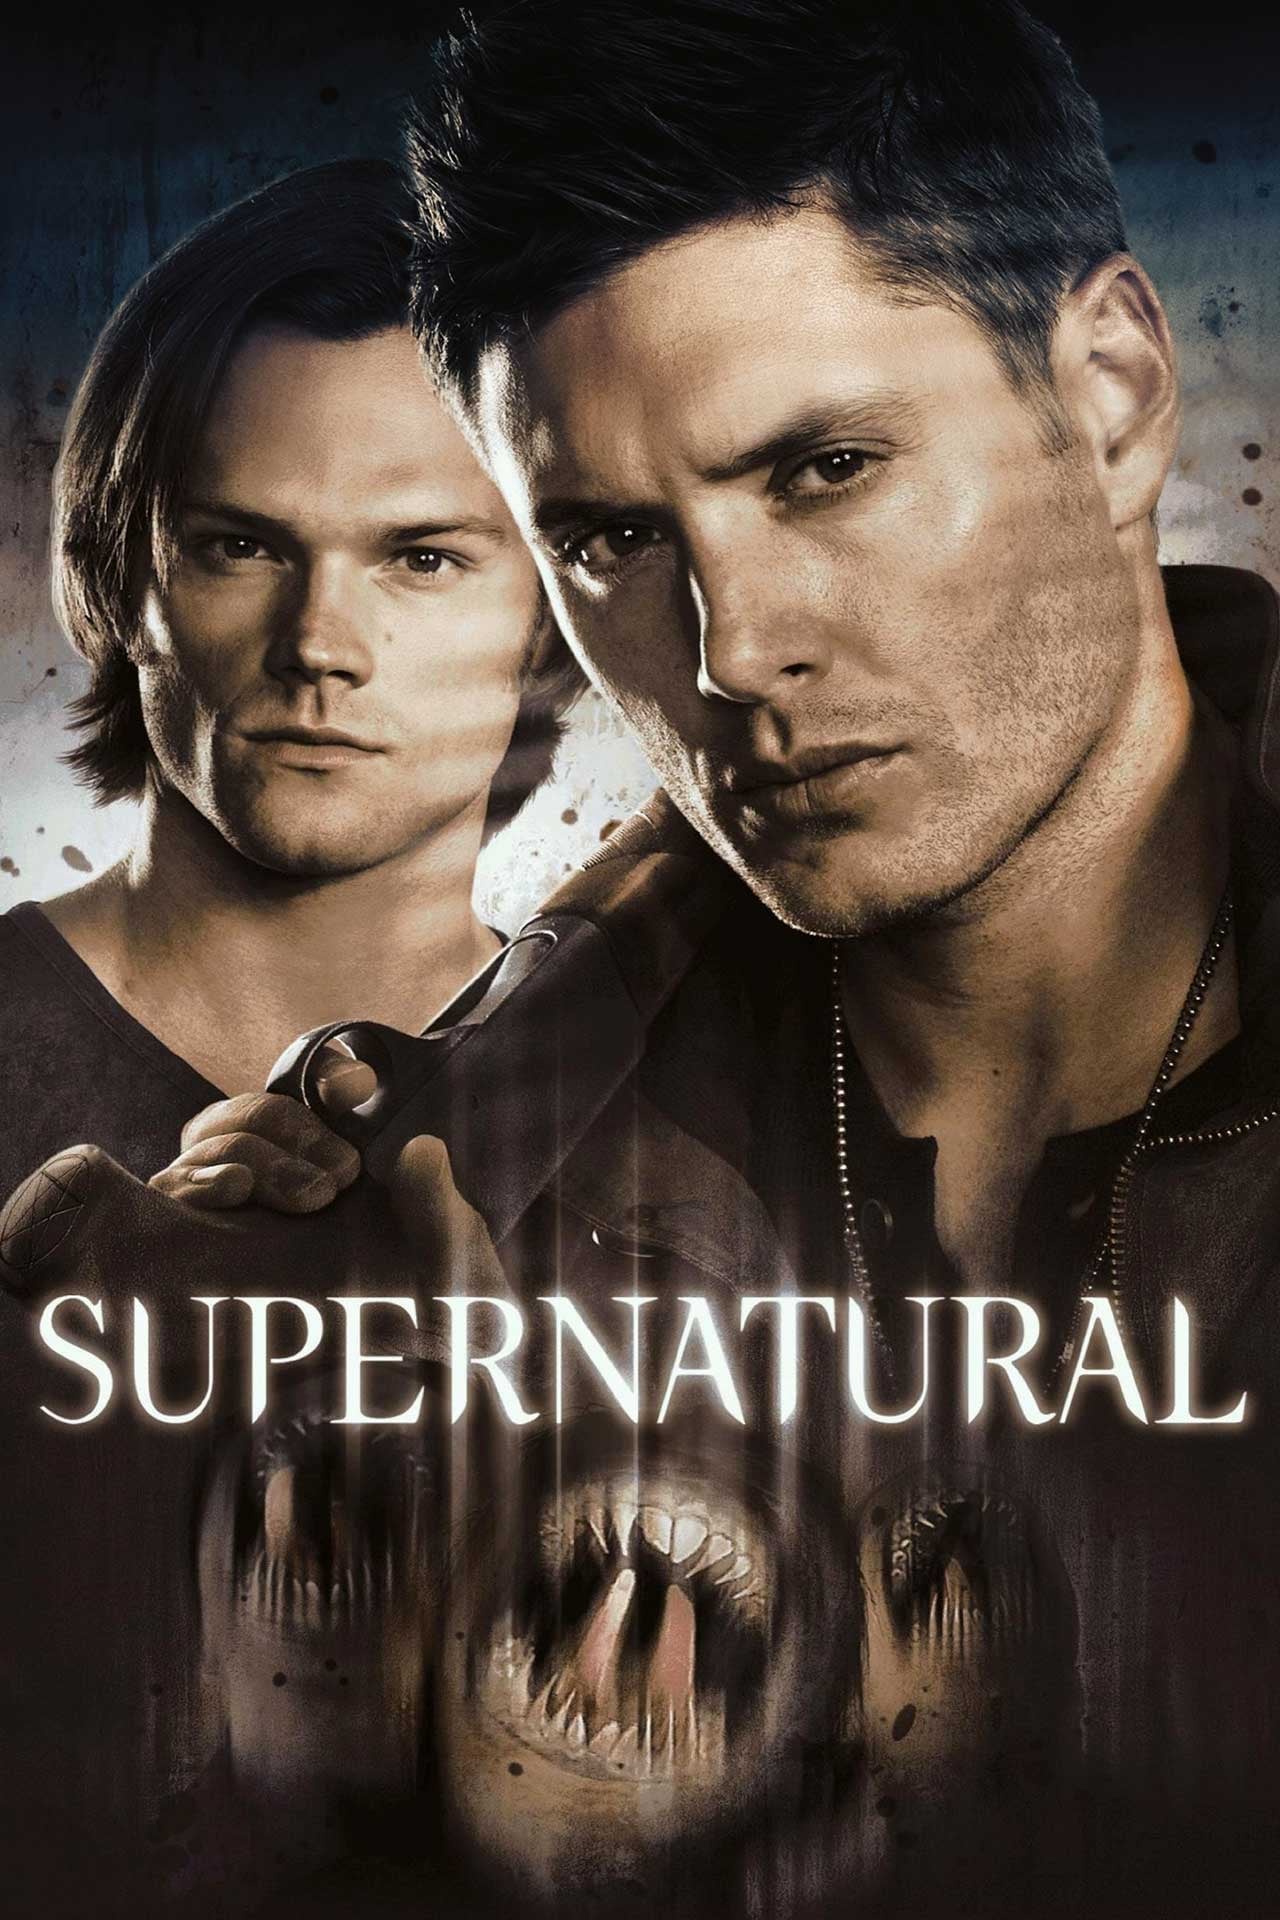 Supernatural ล่าปริศนาเหนือโลก Season 7